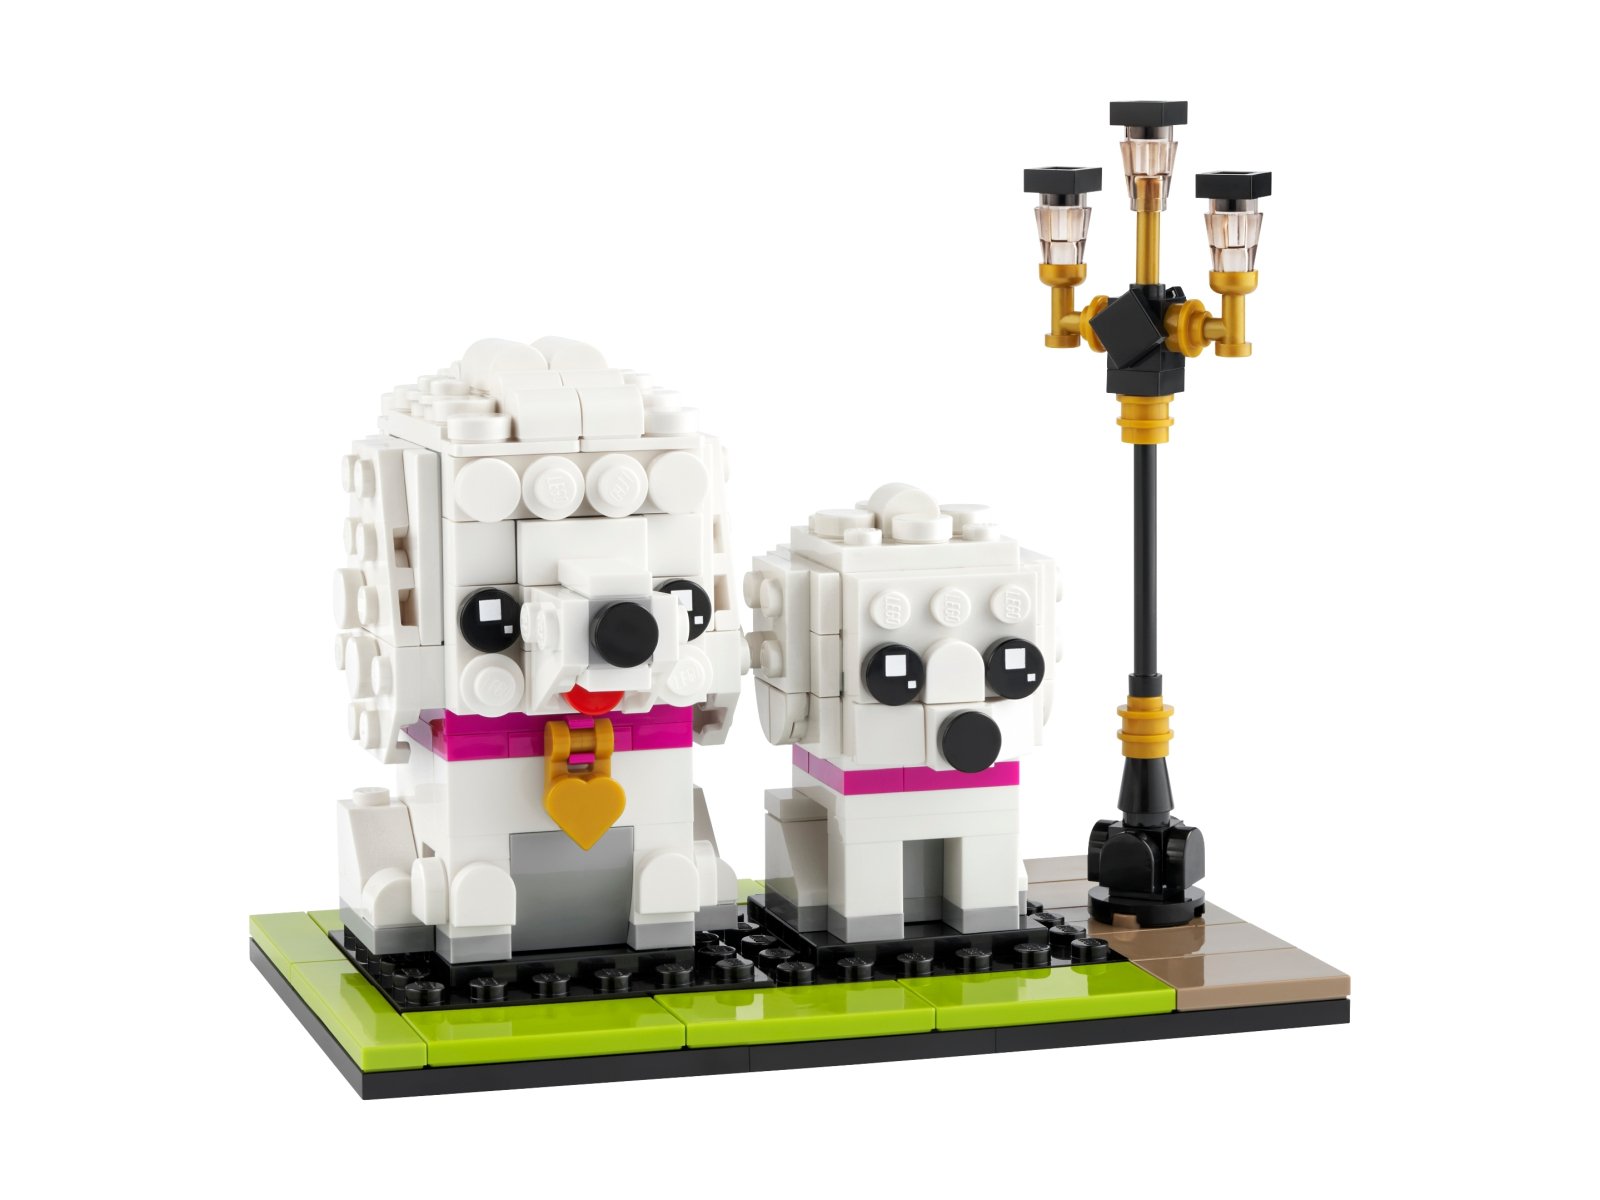 LEGO BrickHeadz 40546 Pudel